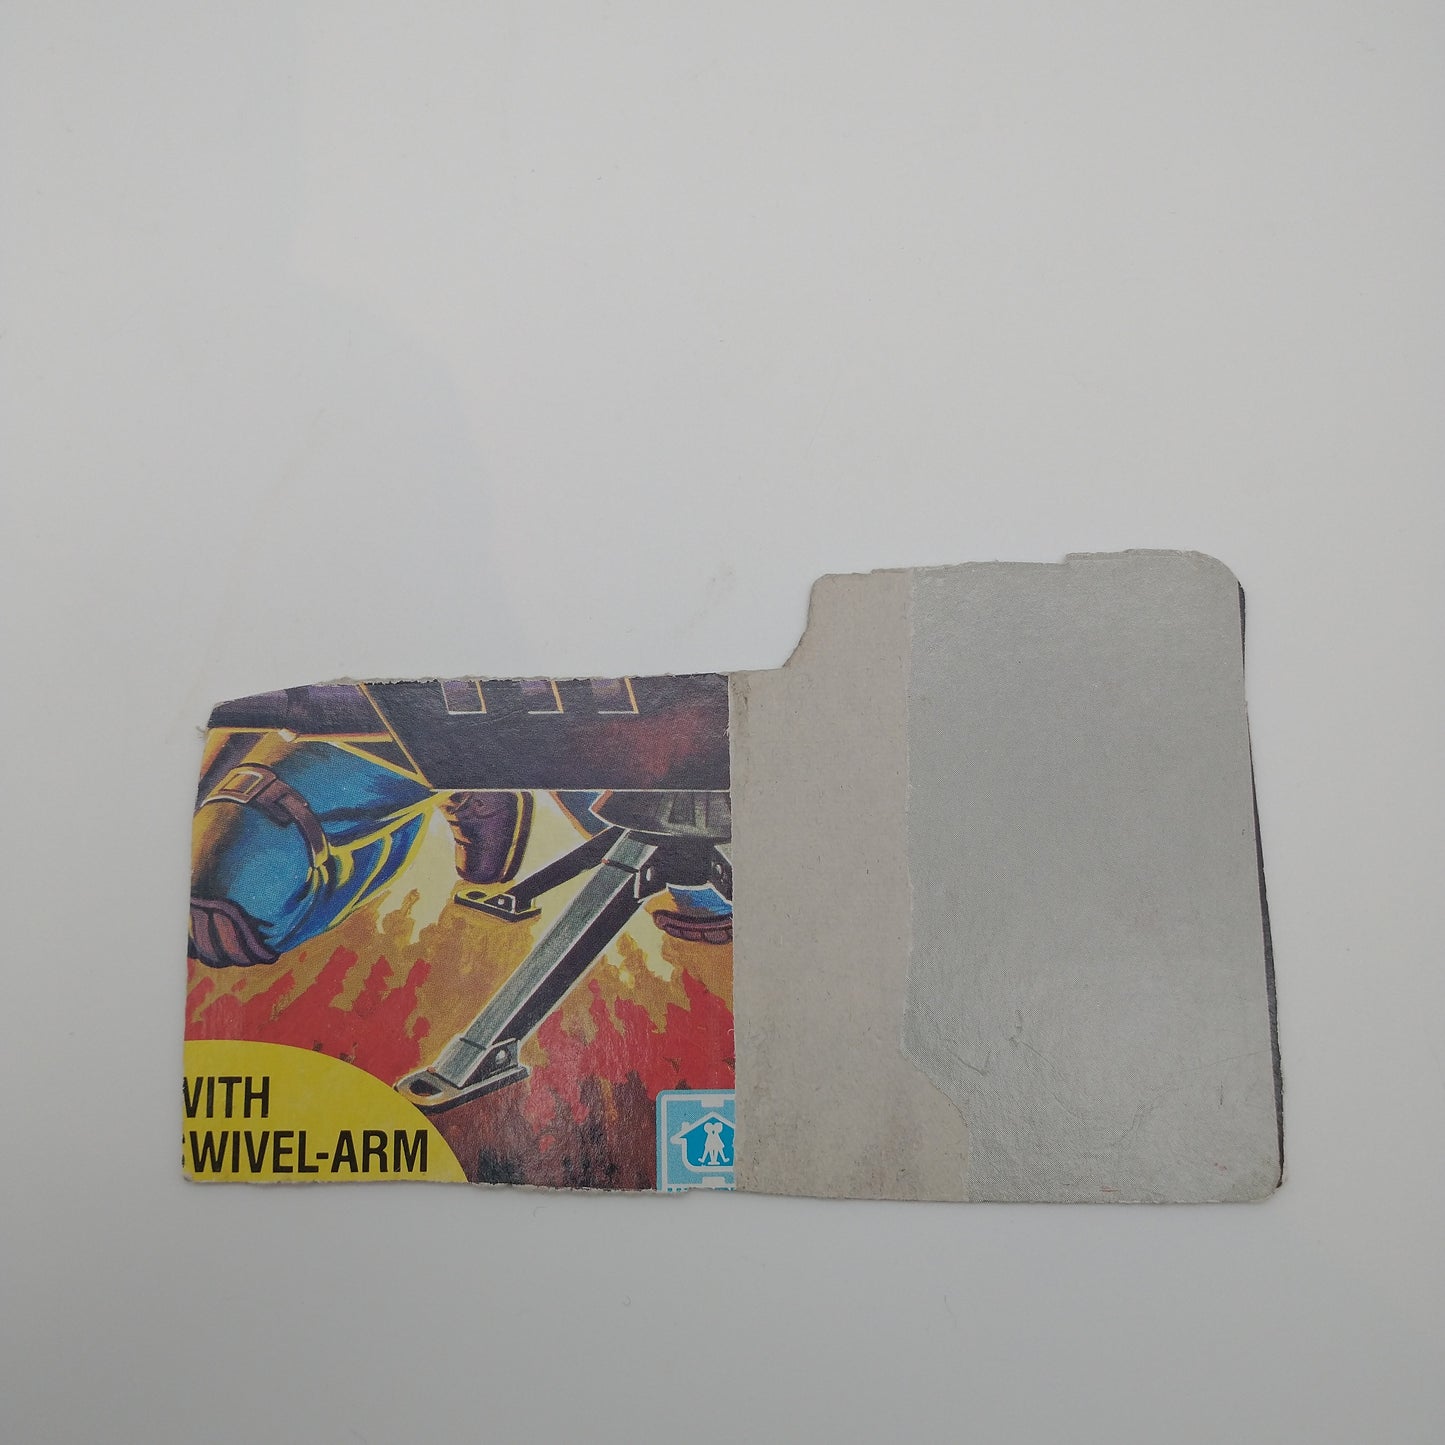 G.I Joe Scrap Iron (V1) 1984 Loose, 100% Complete W/Filecard